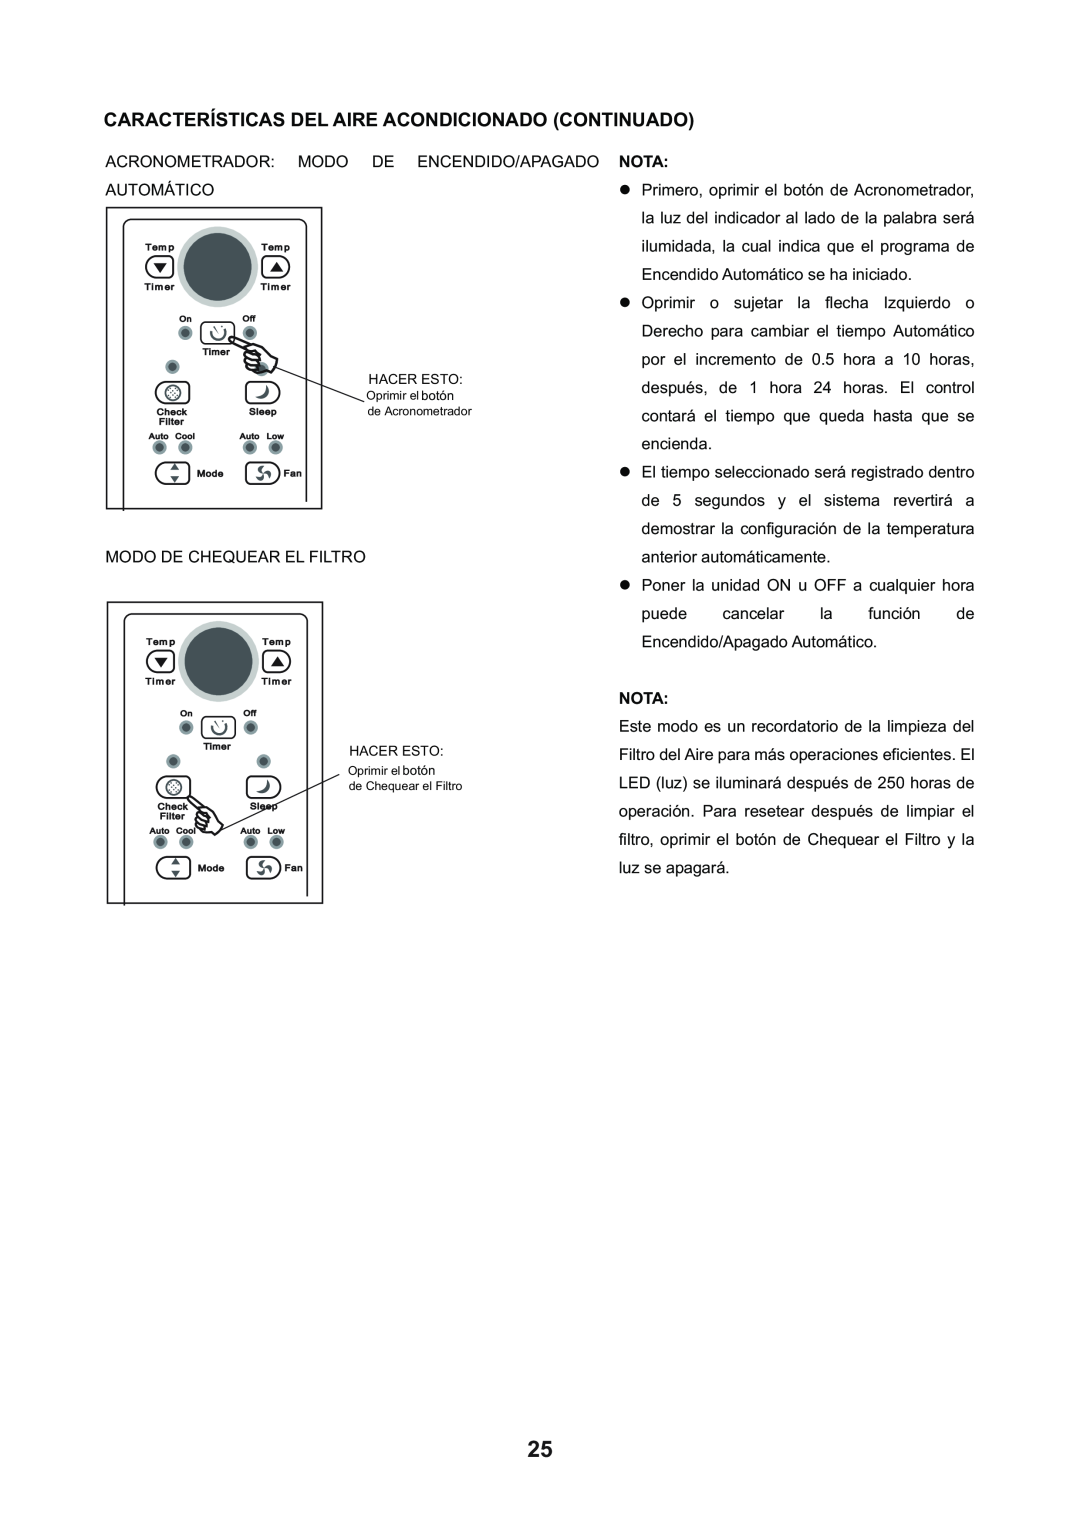 Continental Electric CE11165 Características Del Aire Acondicionado Continuado, Acronometrador, Modo, Automático, Nota 